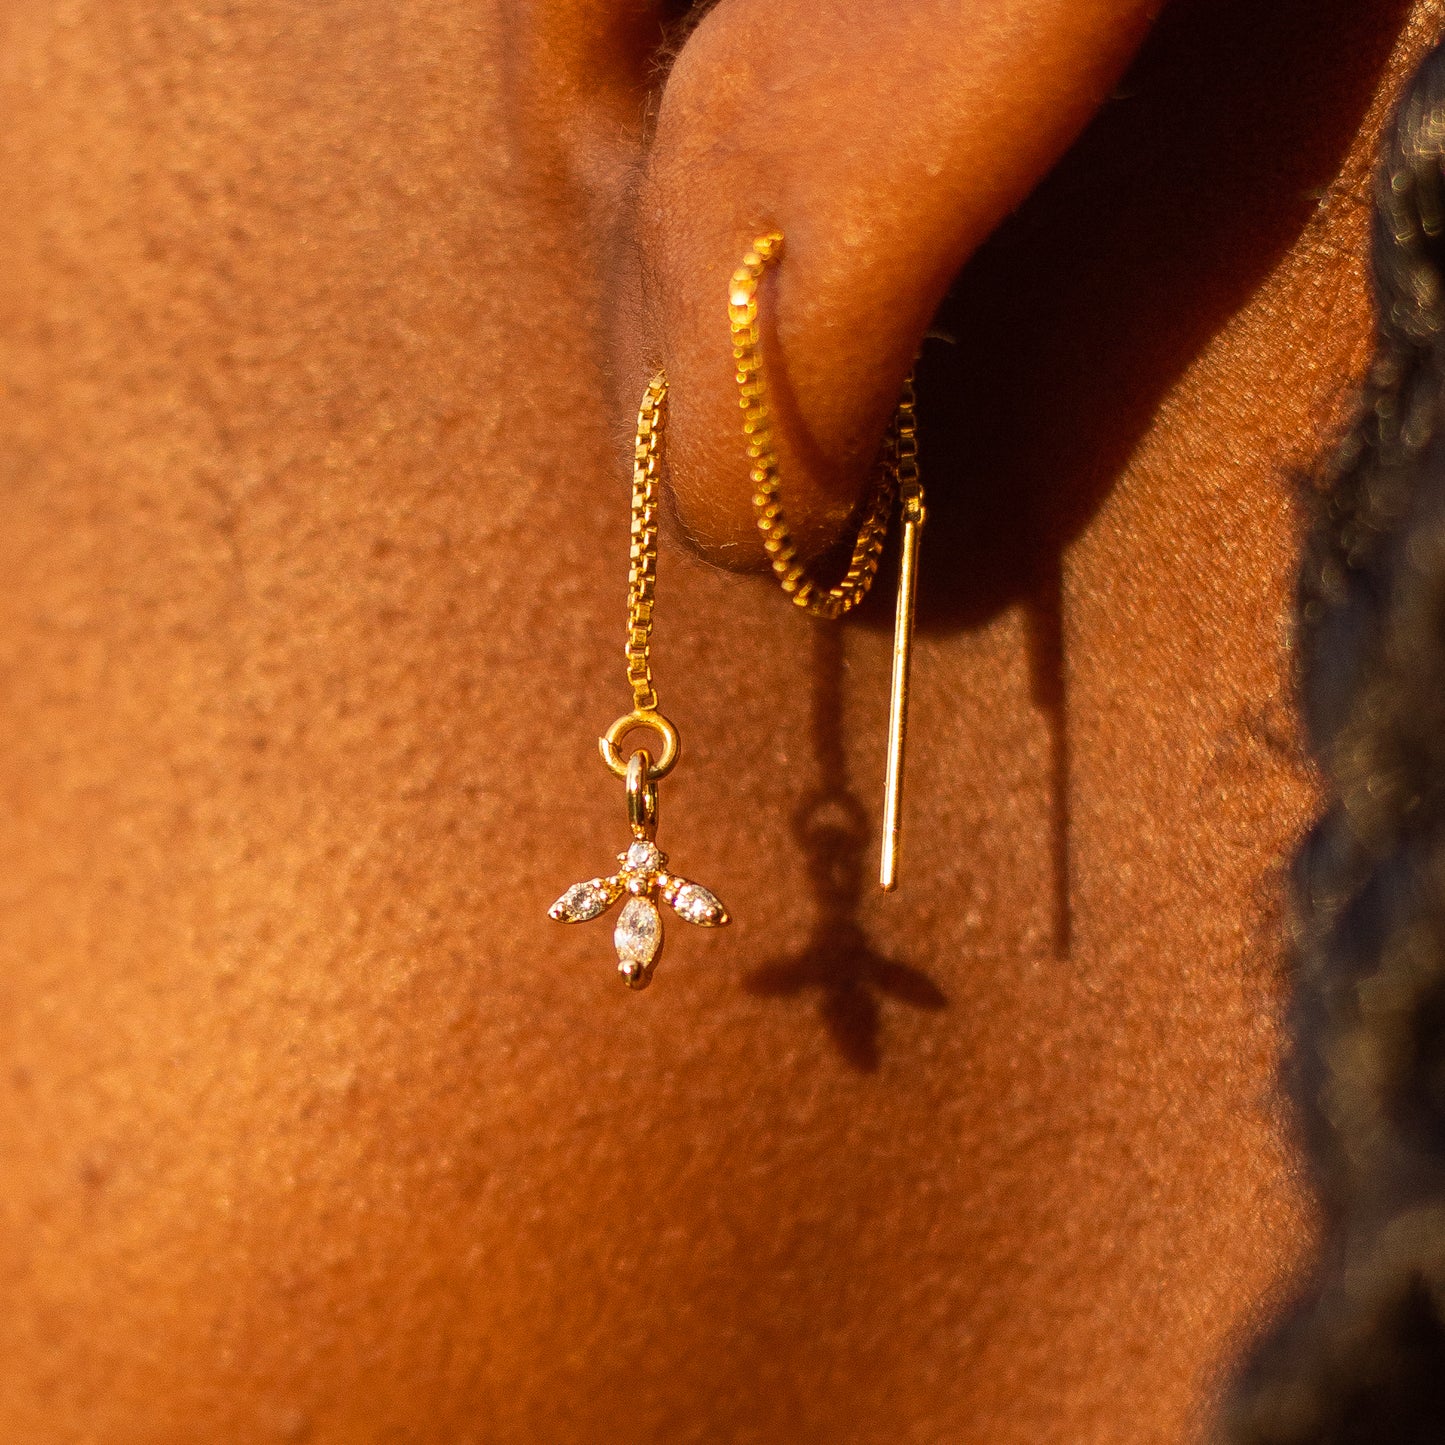 scarlet and saige threader earrings 14k gold filled jewellery kenya